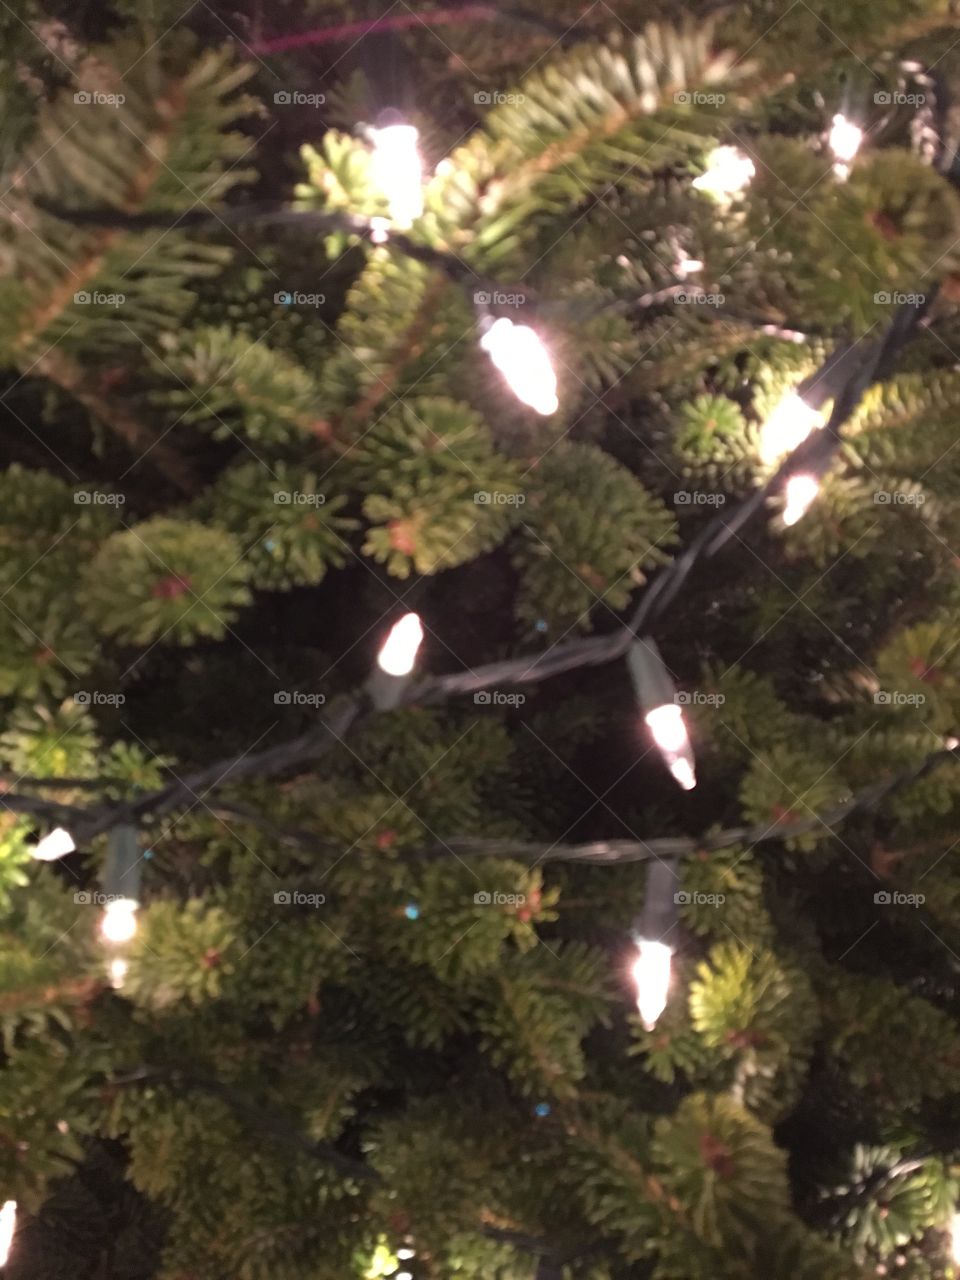 Christmas Tree Lights sans ornaments